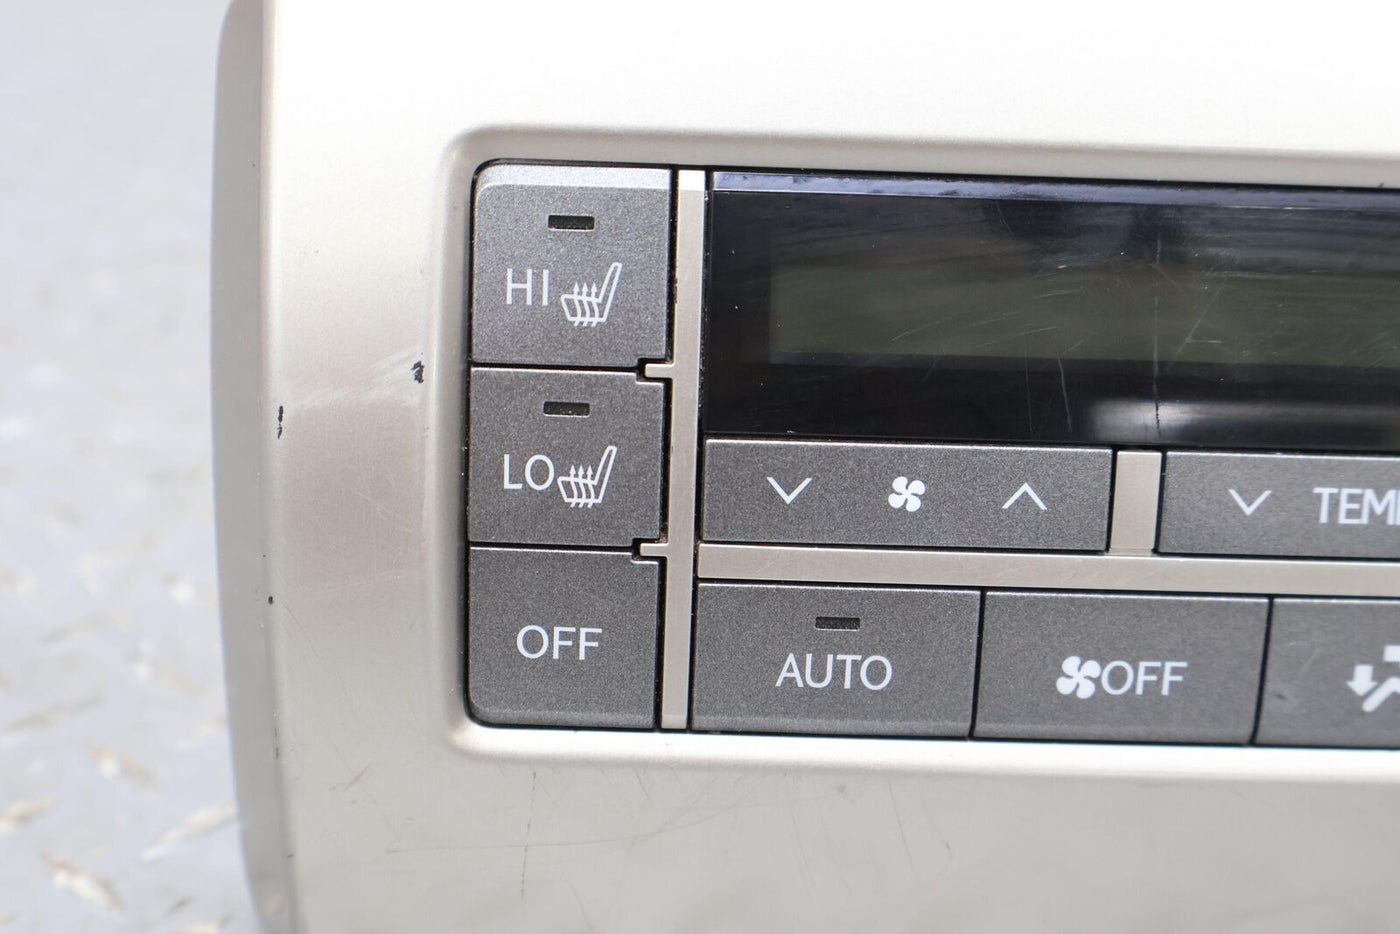 10-13 Lexus GX460 Rear Temperature Control Panel W/Heated Rear Seats (Tested)